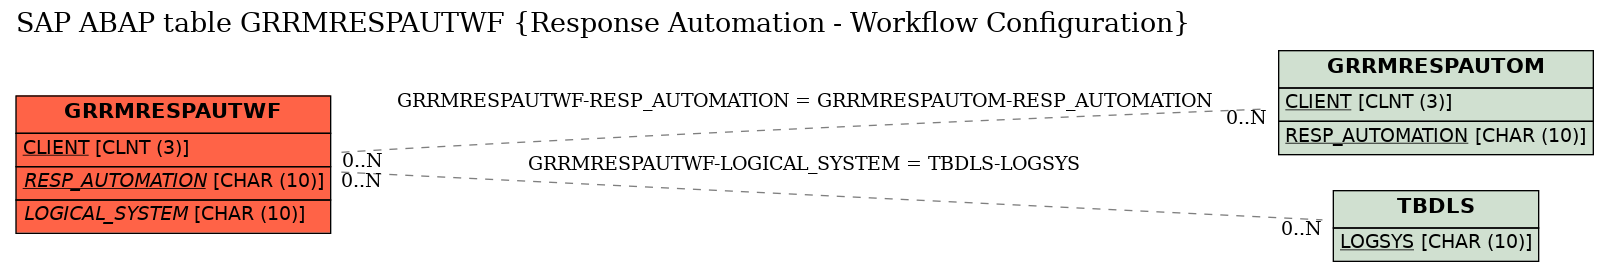 E-R Diagram for table GRRMRESPAUTWF (Response Automation - Workflow Configuration)